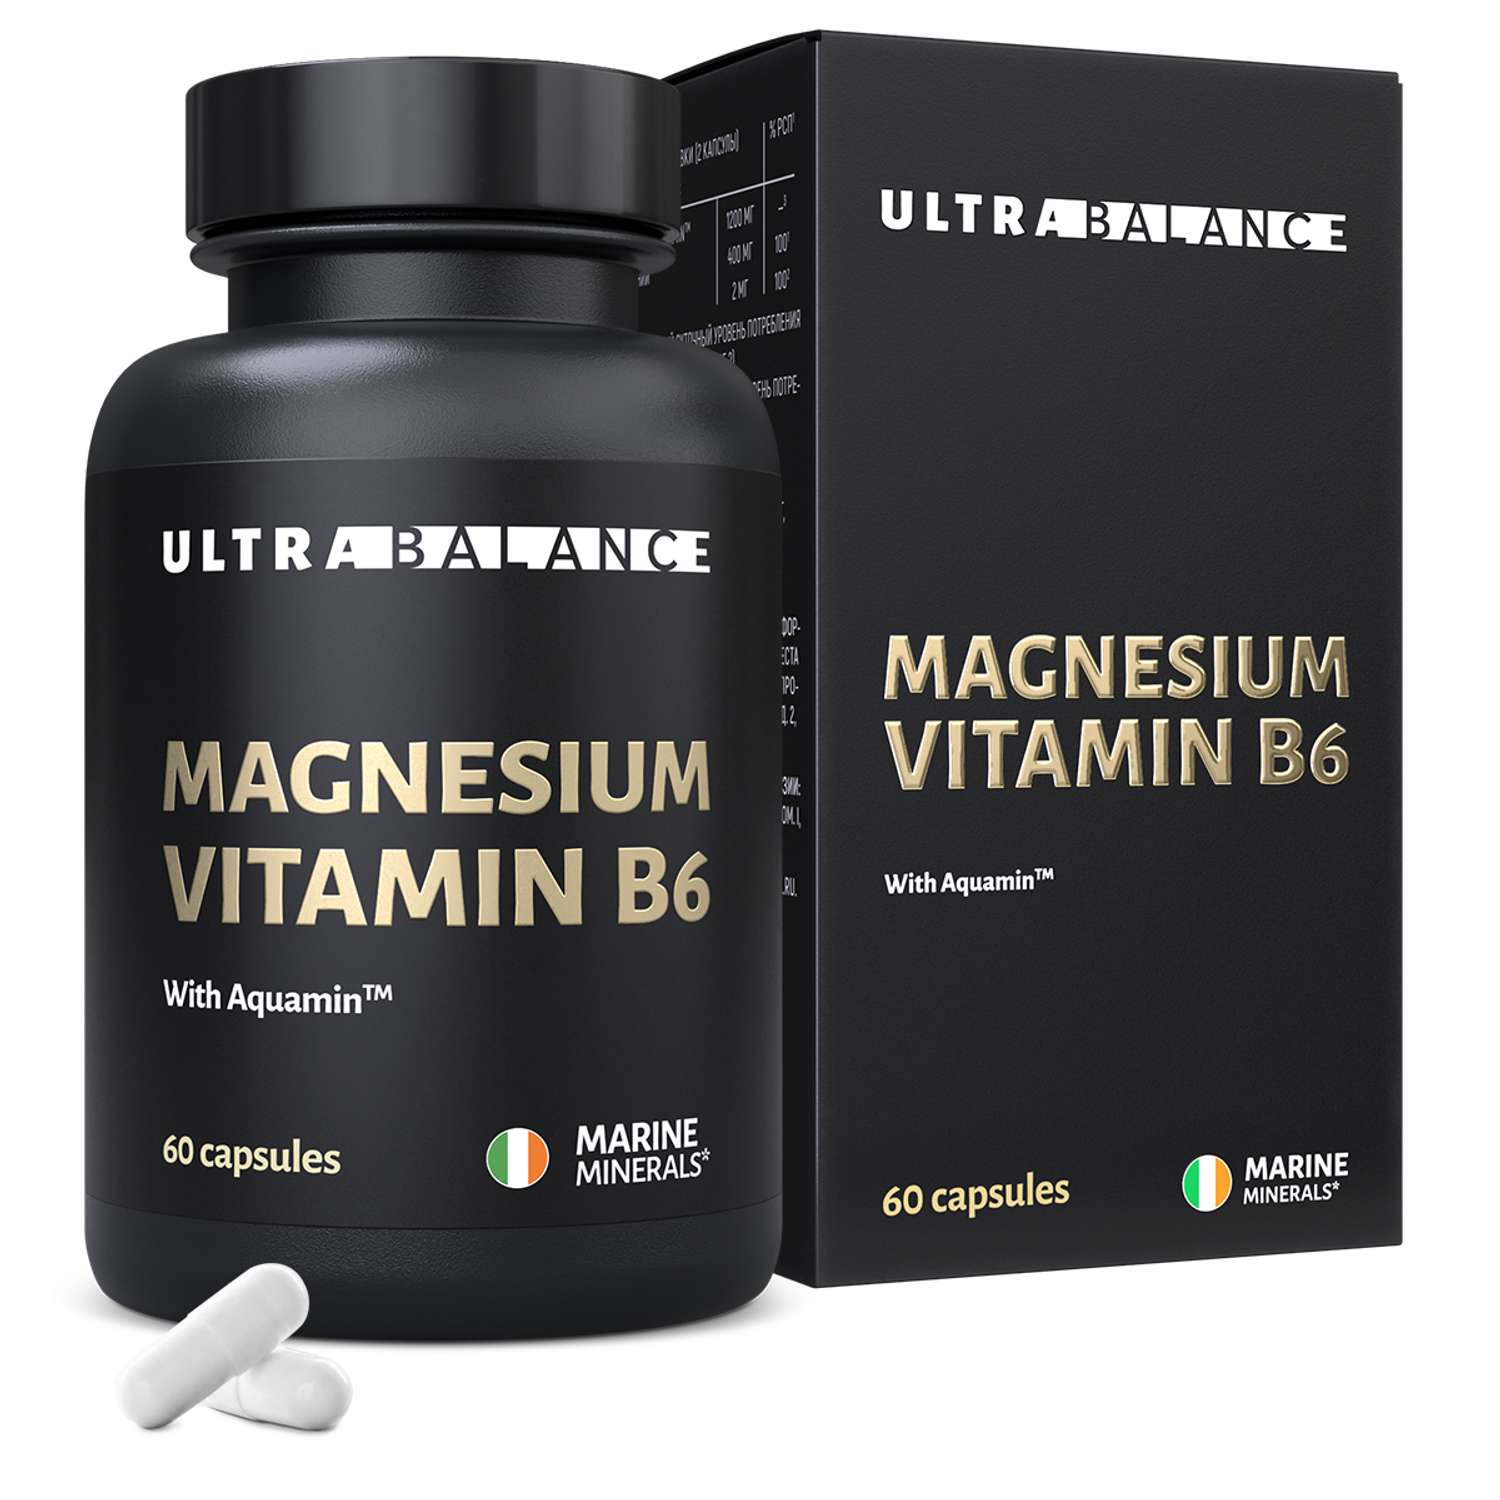 Магний витамин В6 UltraBalance антистресс успокоительное Mg b6 премиум с аквамином 60 капсул - фото 1